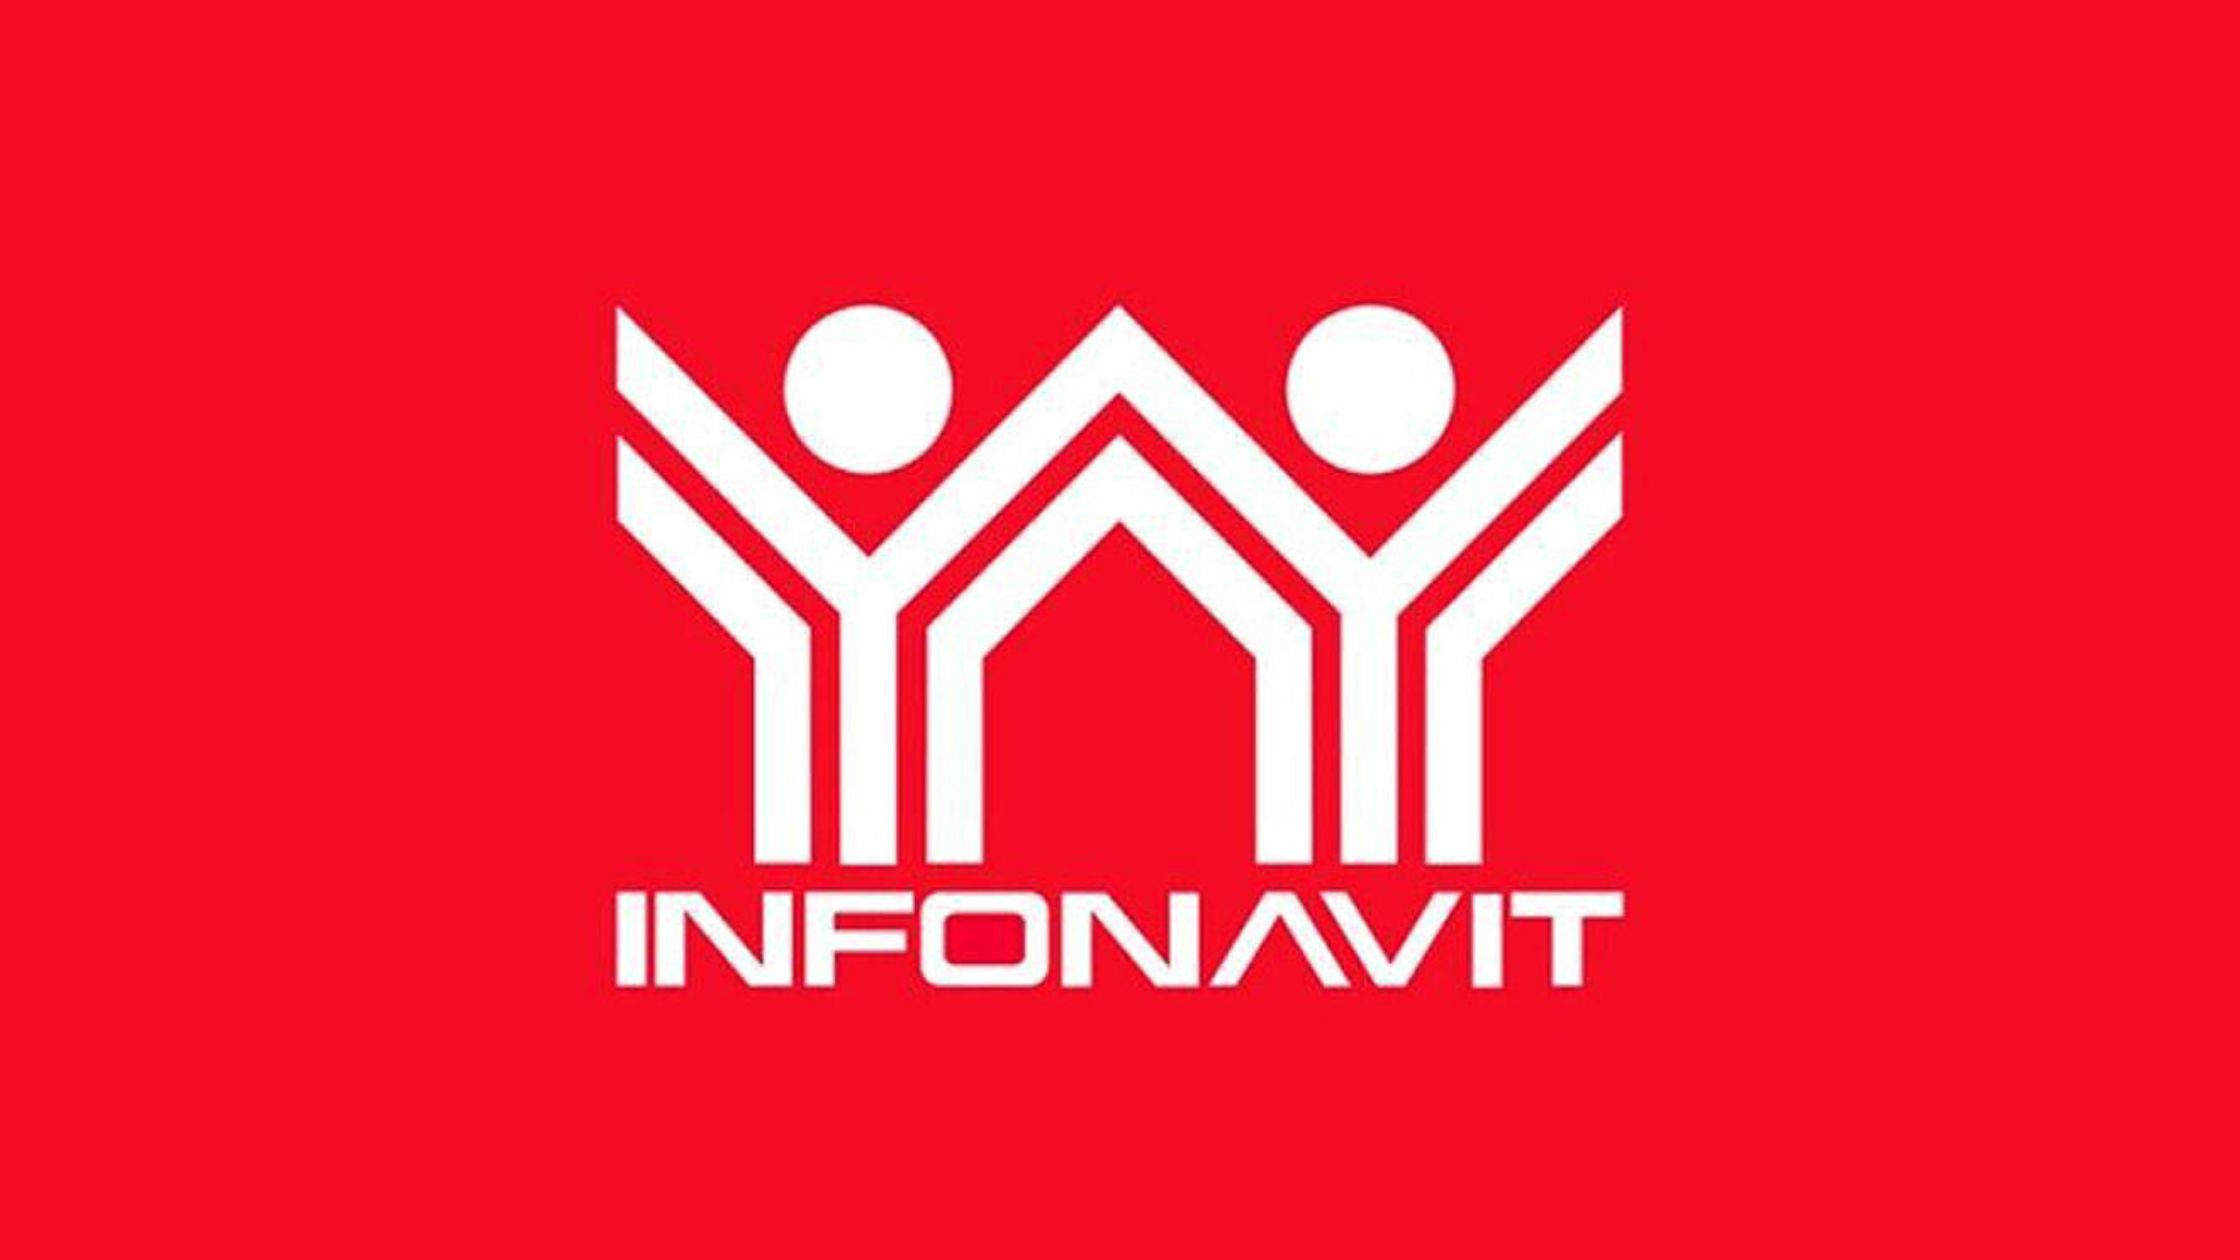 infonavit logo